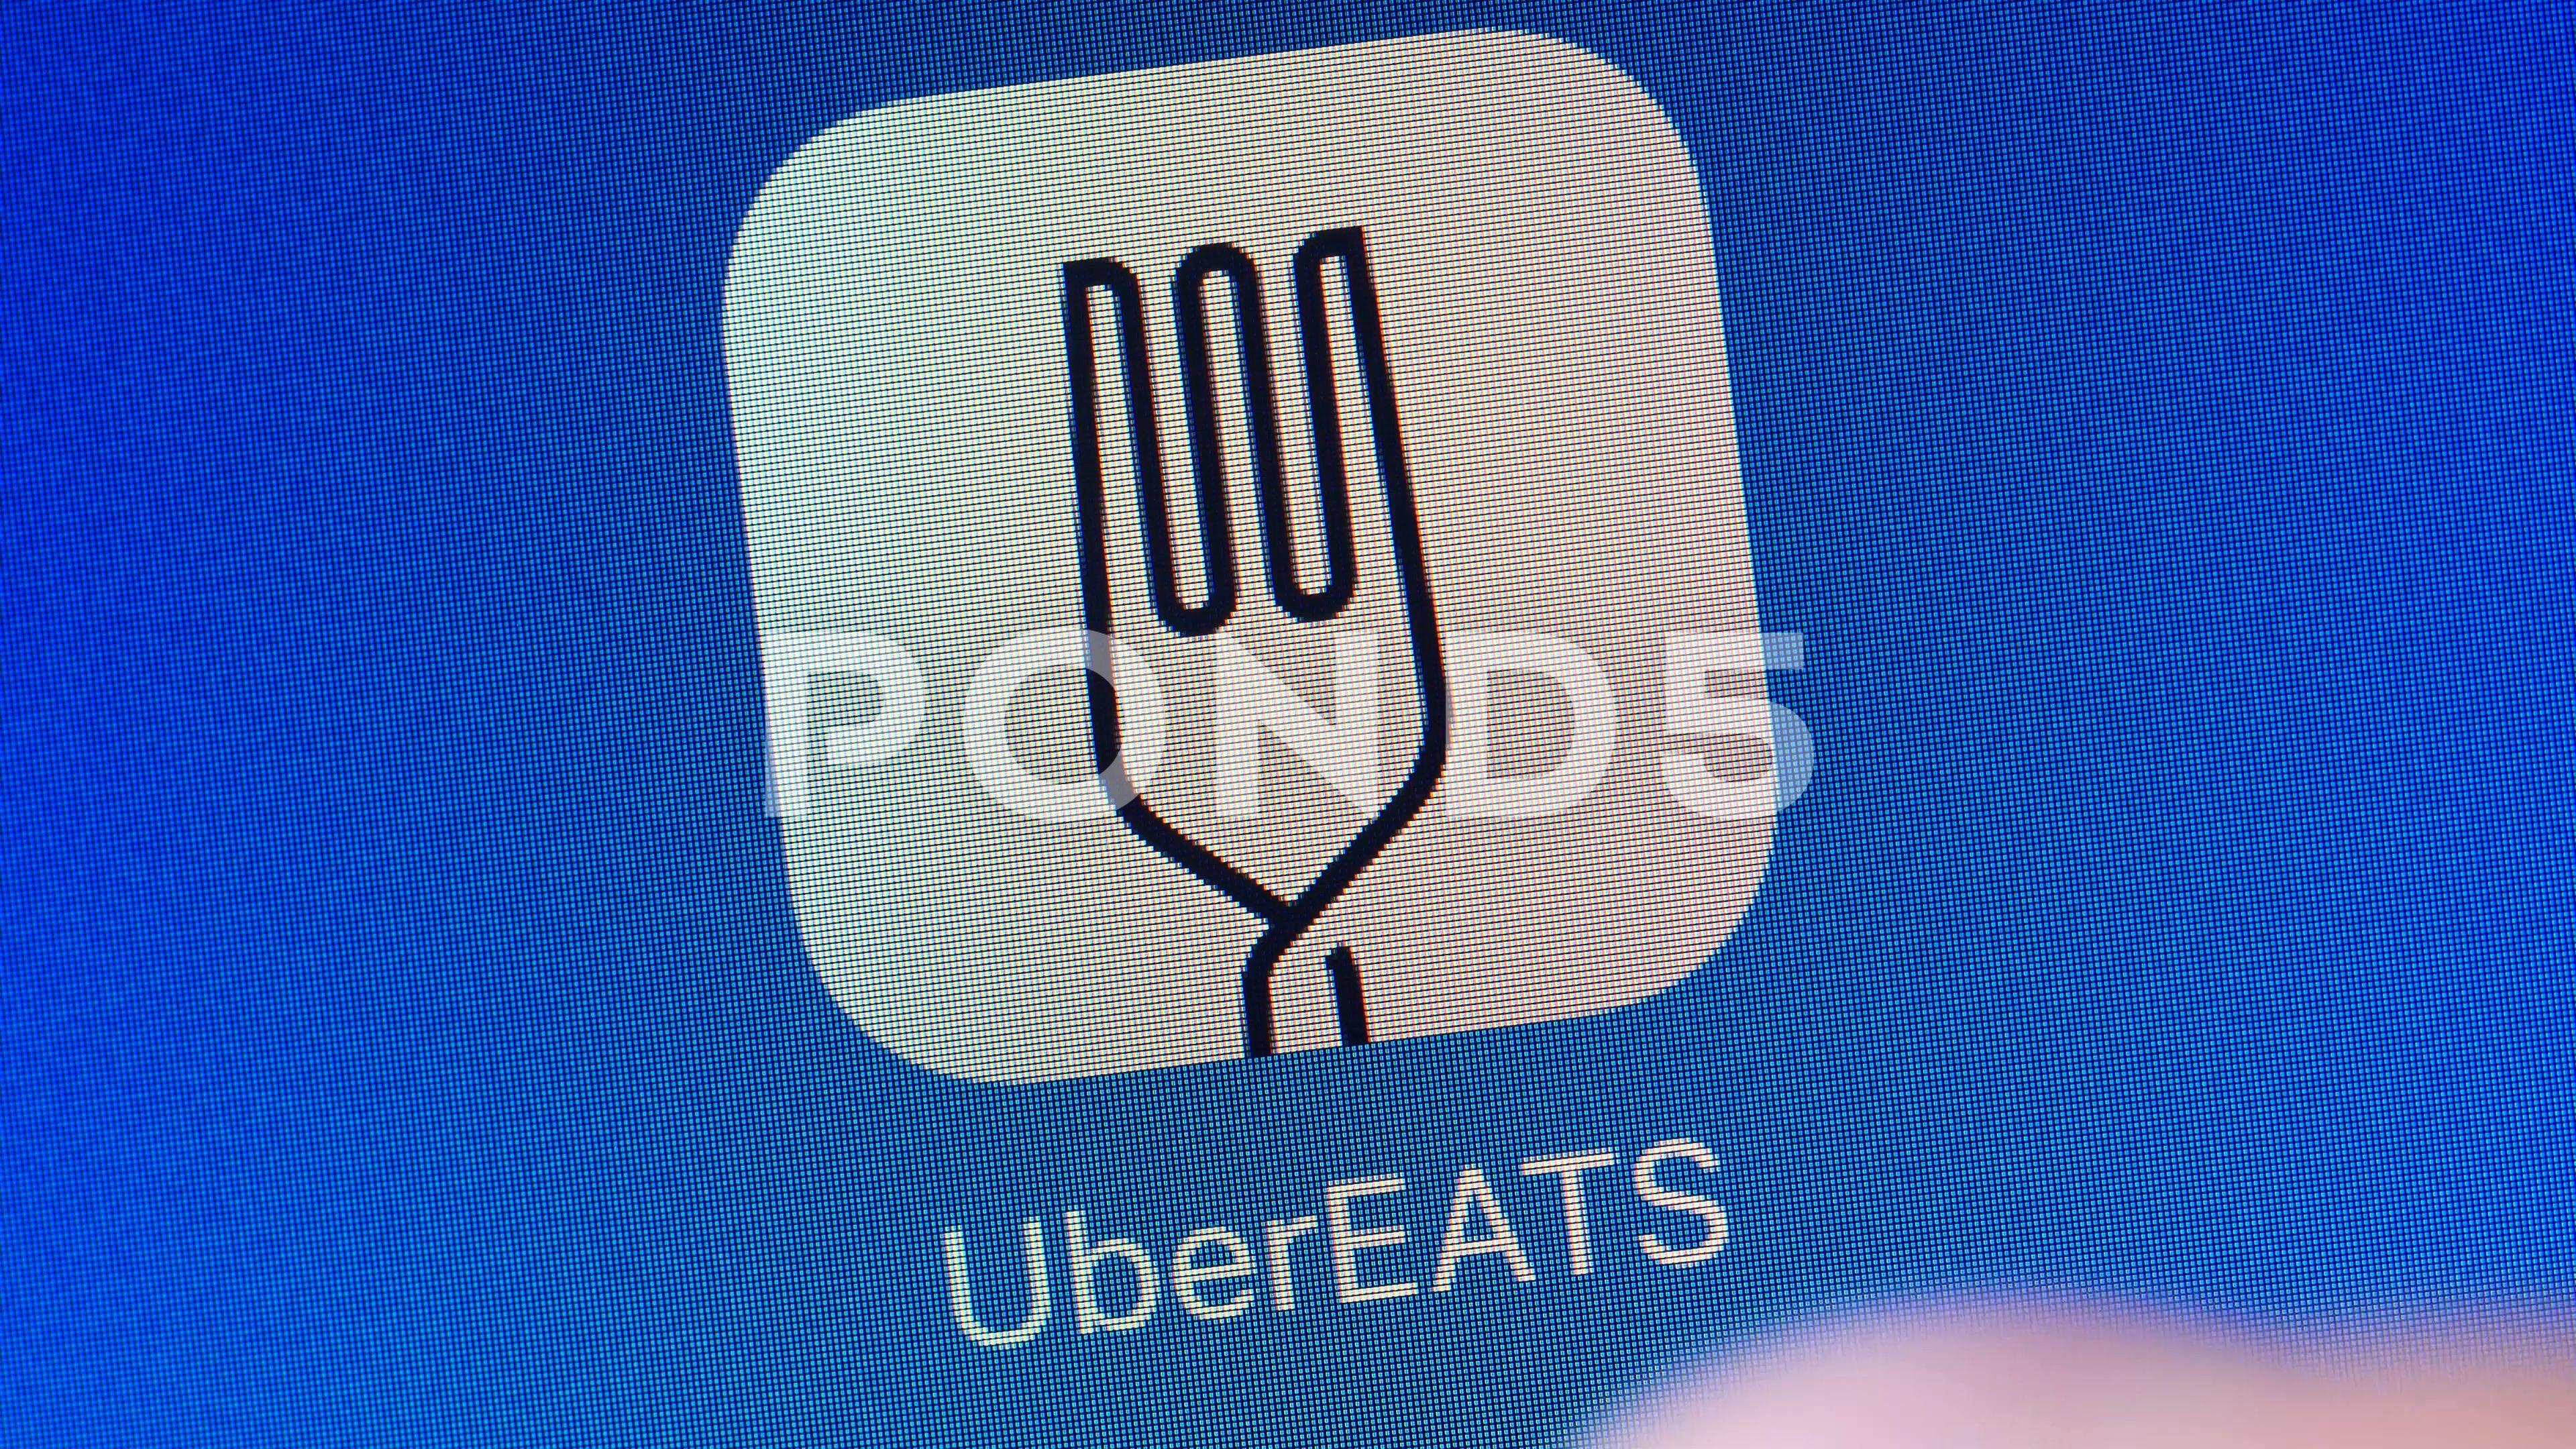 Uber Eats App Logo - Uber Eats App Icon Launching On Smartphone Screen Video